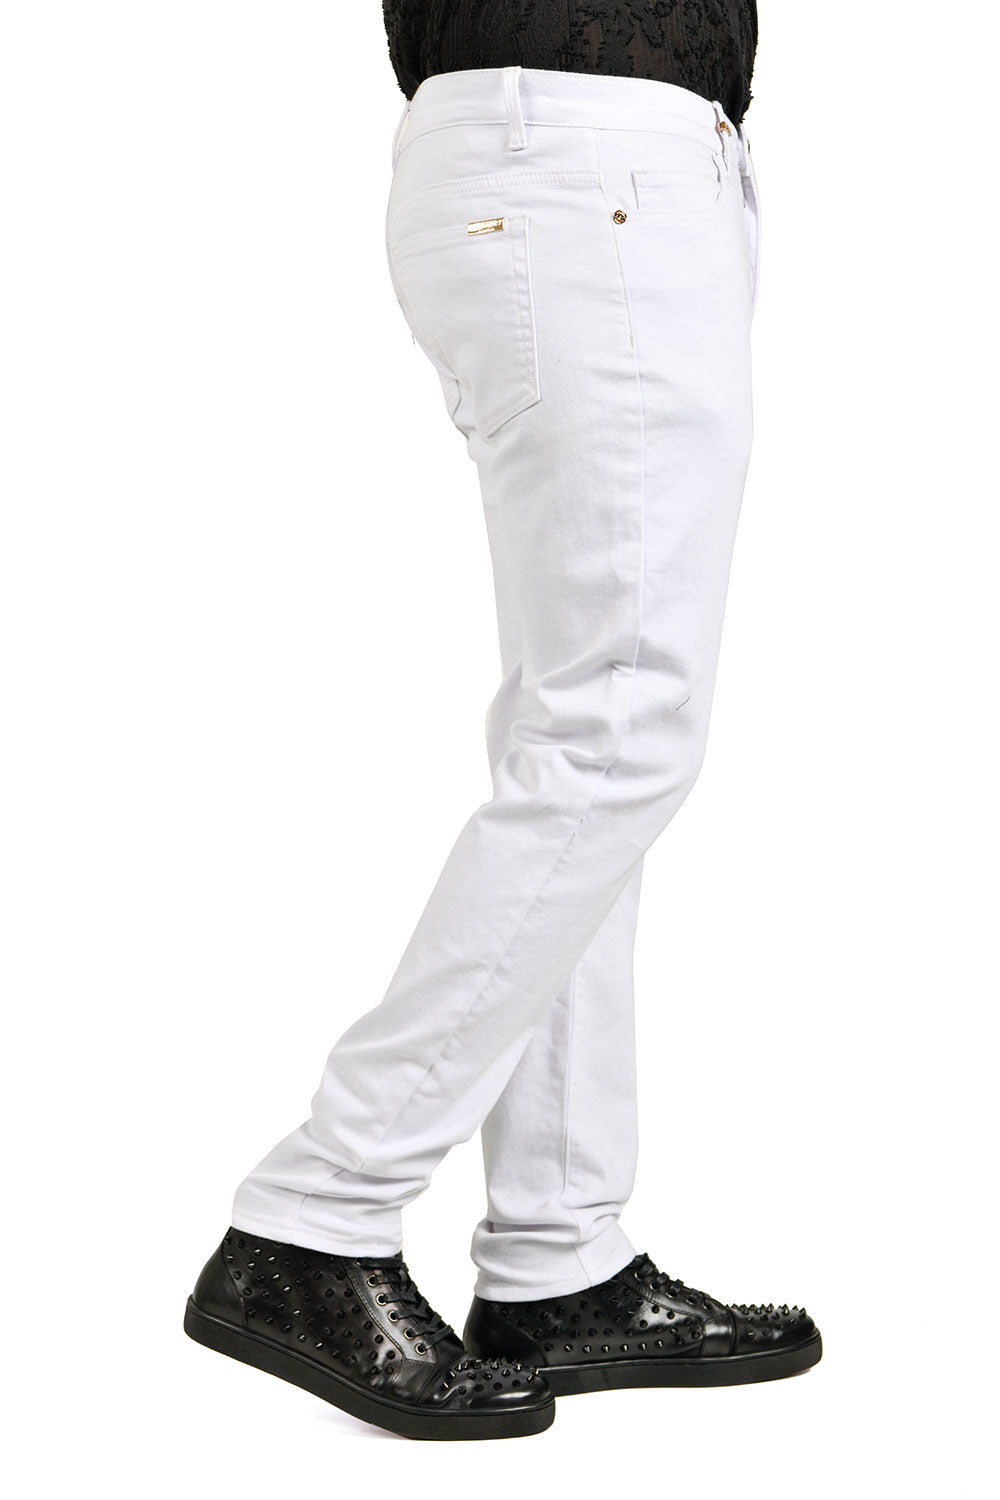 BARABAS Men's Slim Fit Snow White Denim Jeans DP3649